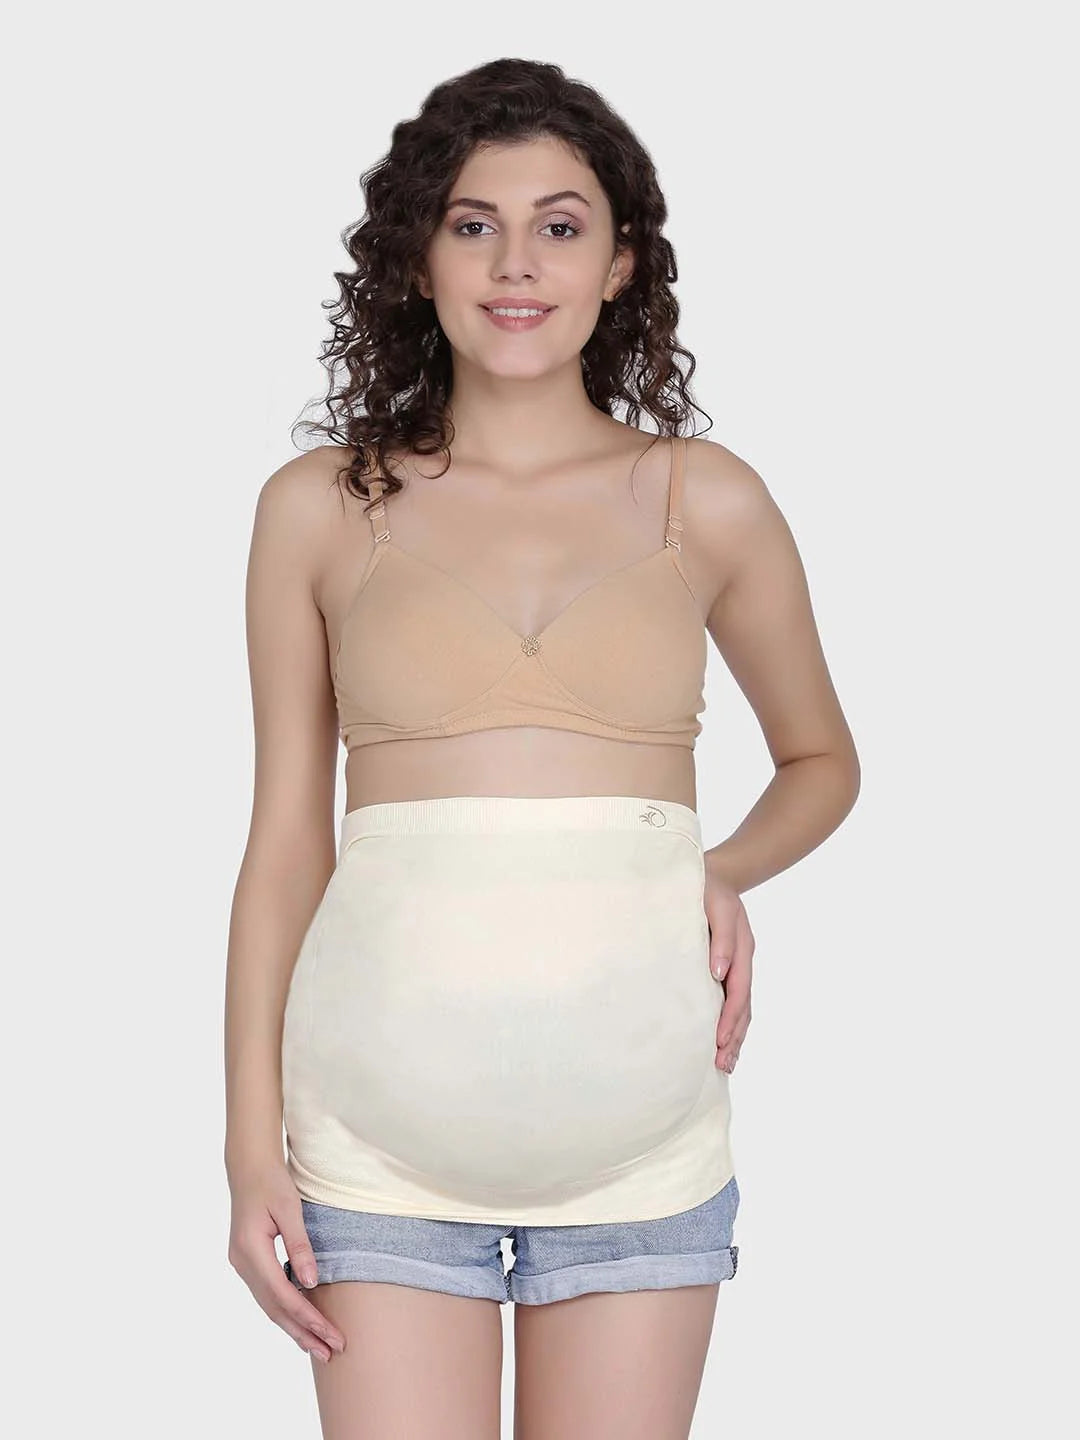 Pre Pregnancy Tummy Support Belt - Da Intimo - Lingerie Online Store India